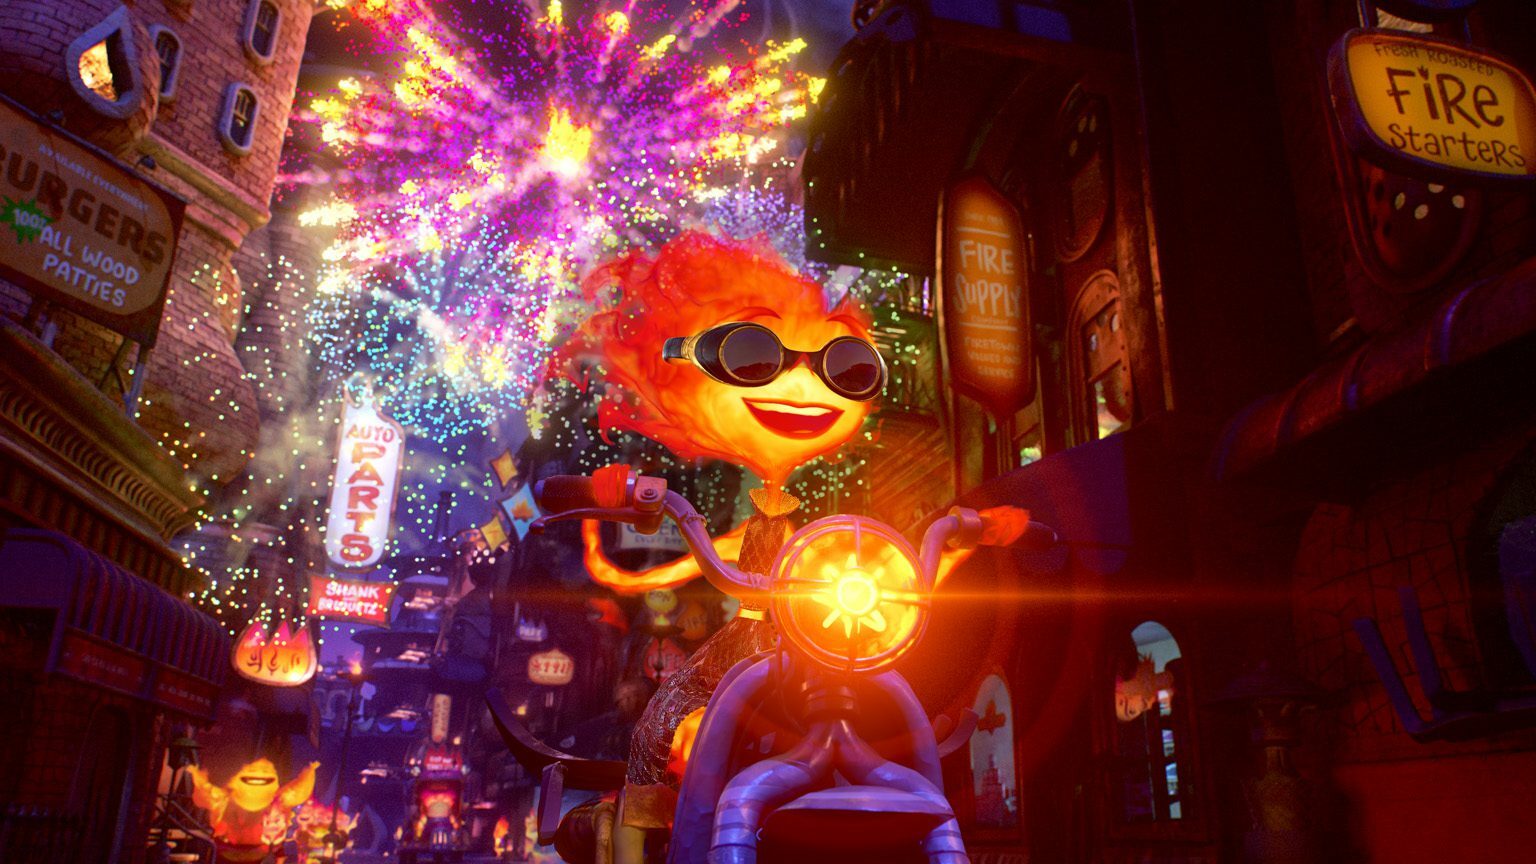 Elemental: Unsere spoilerfreie Kritik zum neuen Pixar-Film